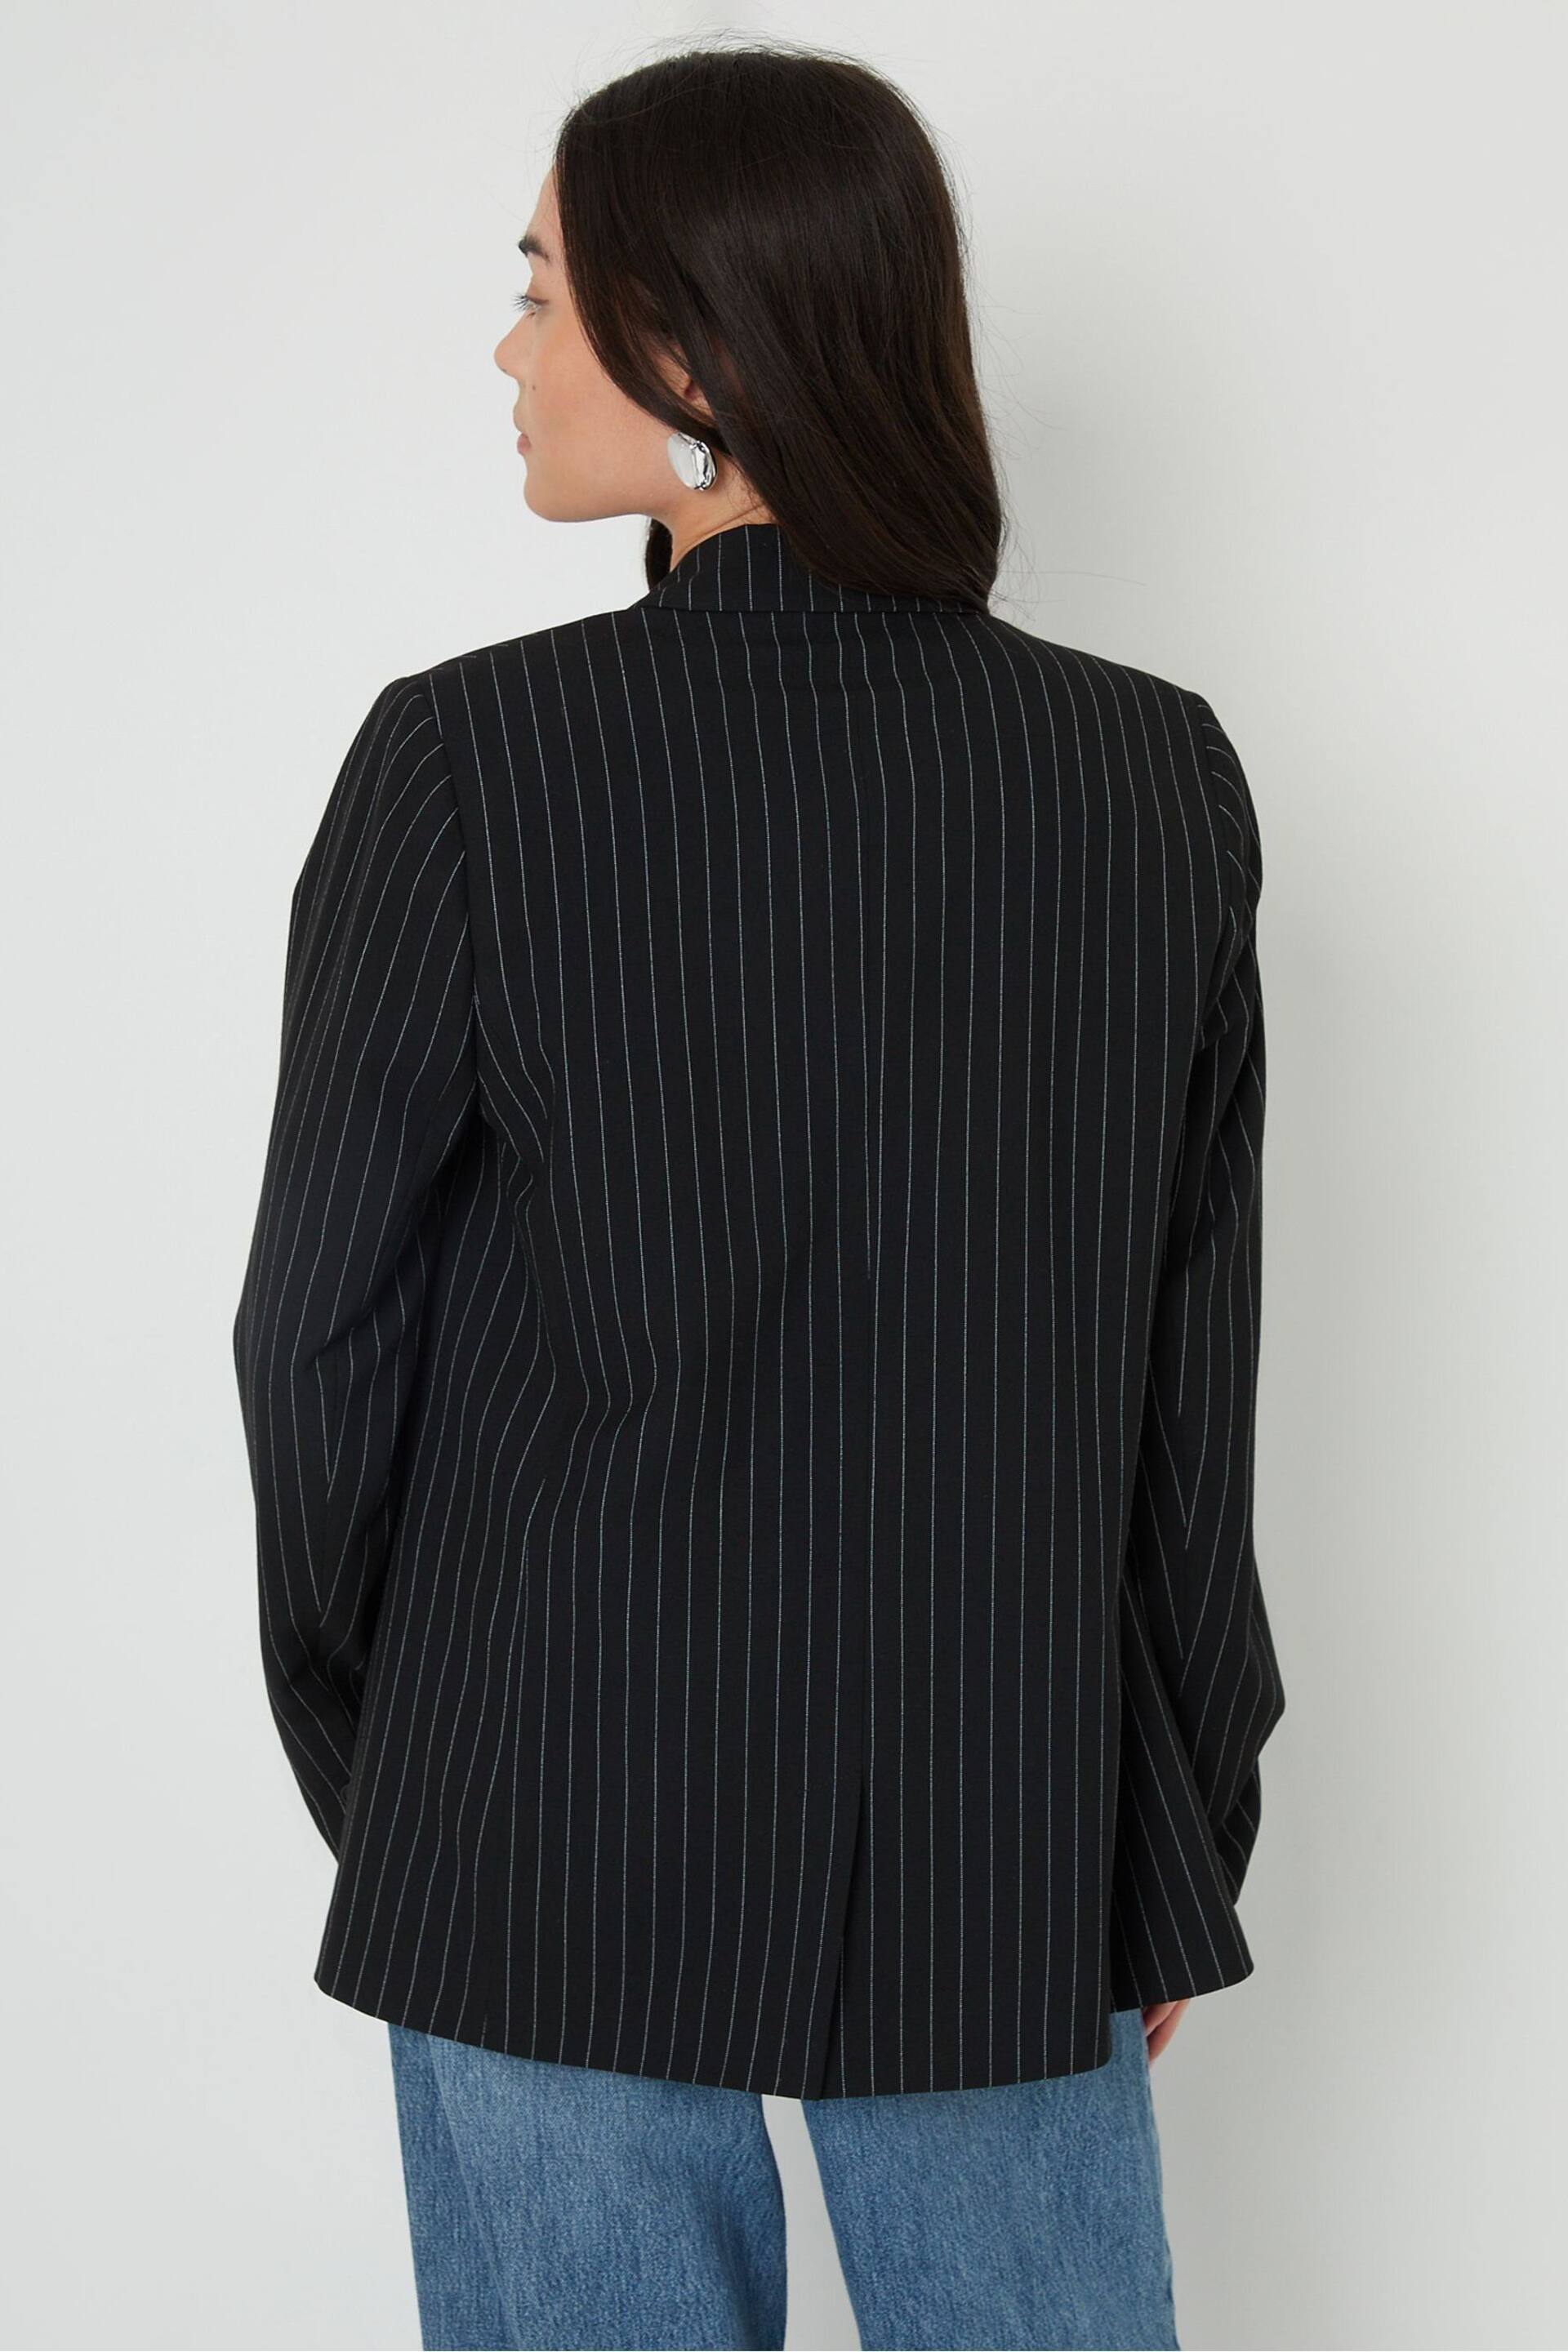 Threadbare Black Classic Pinstripe Lined Blazer - Image 2 of 4